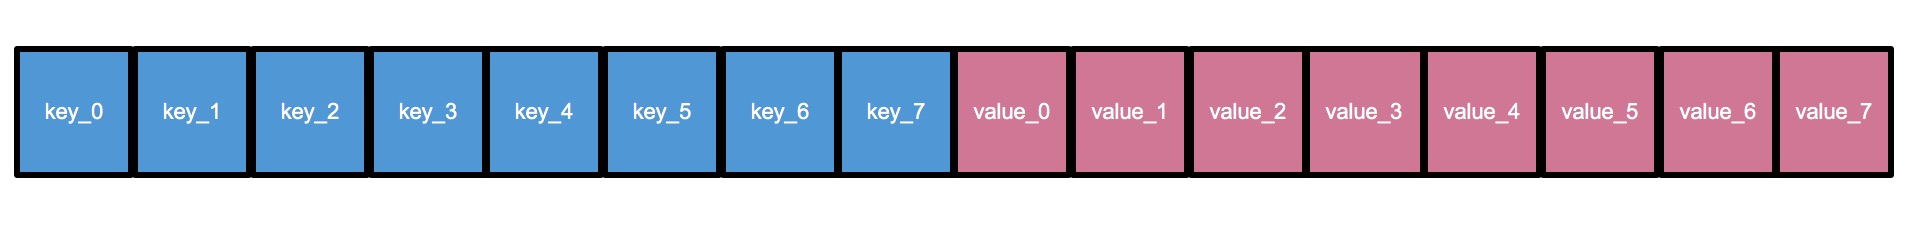 key_value.png